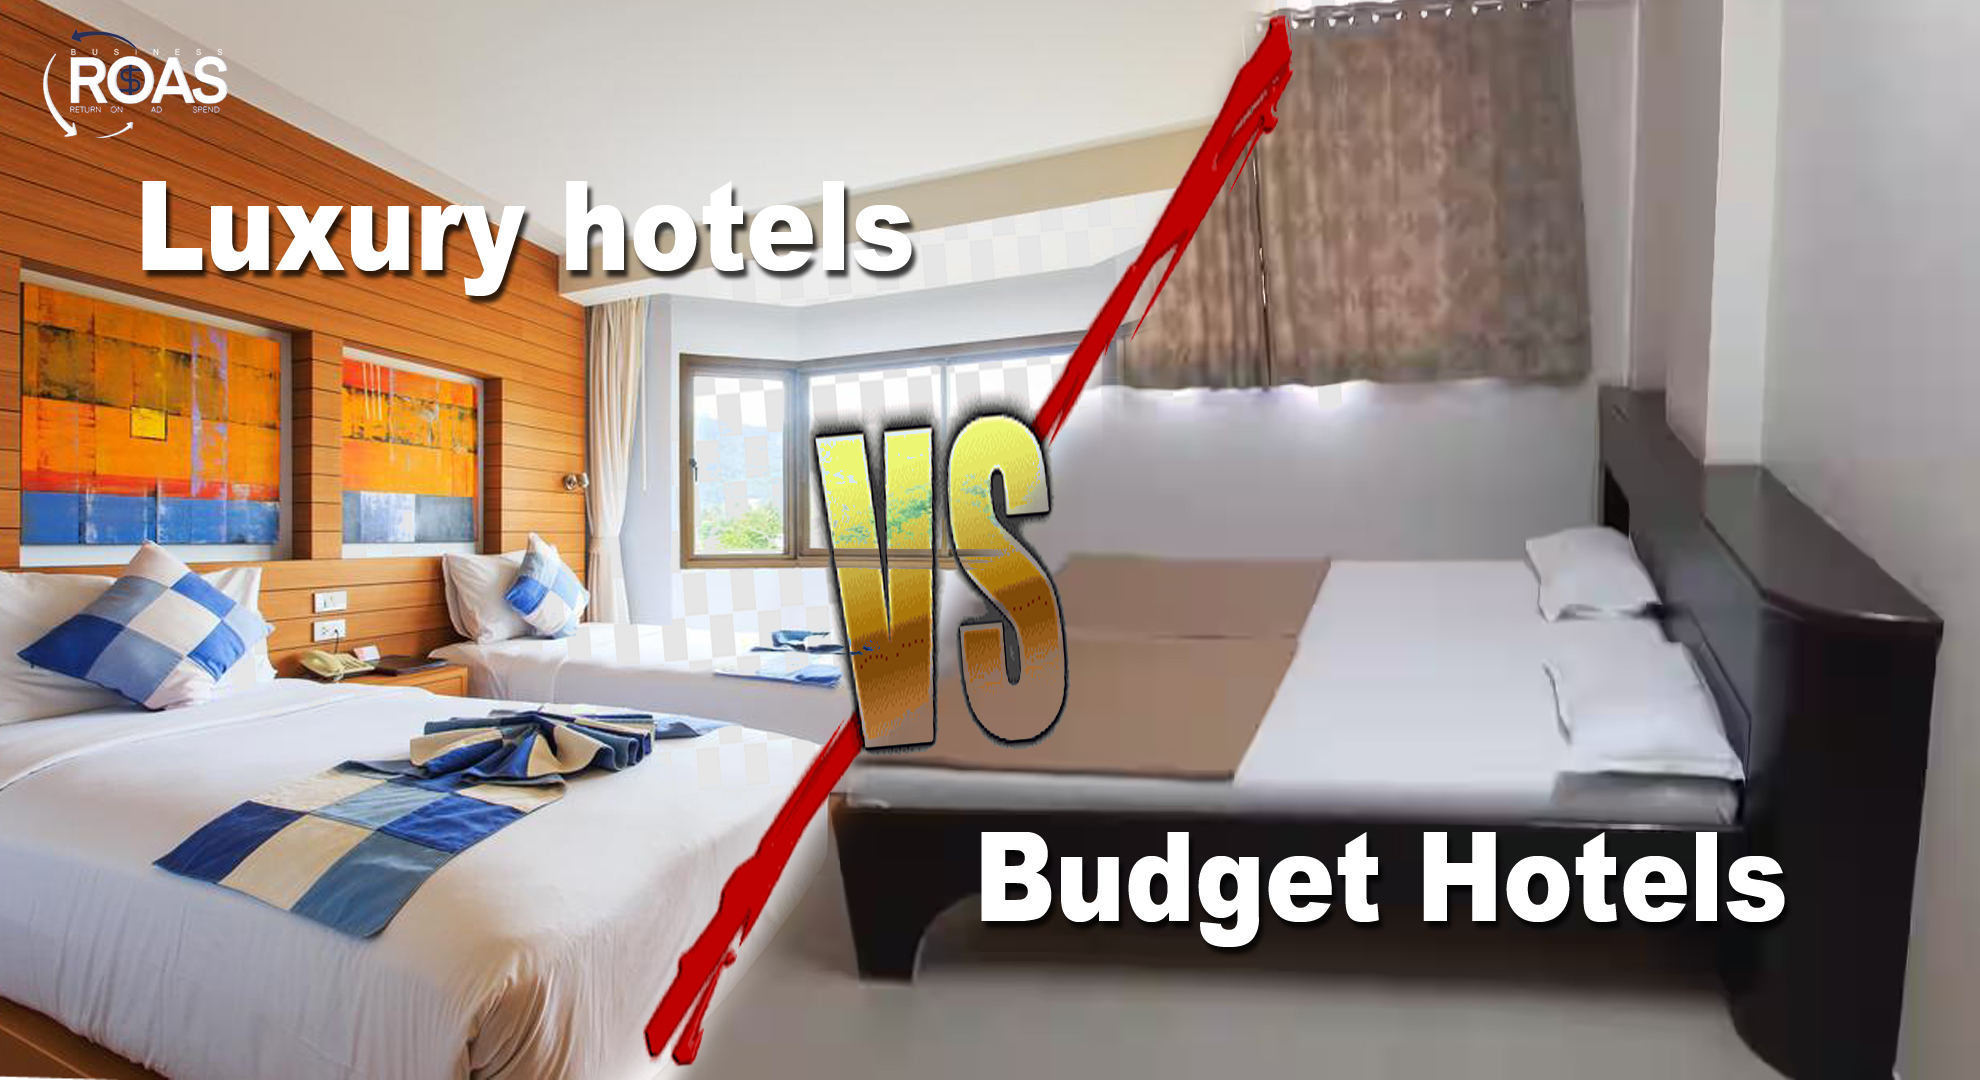 Luxury hotels vs budget hotels